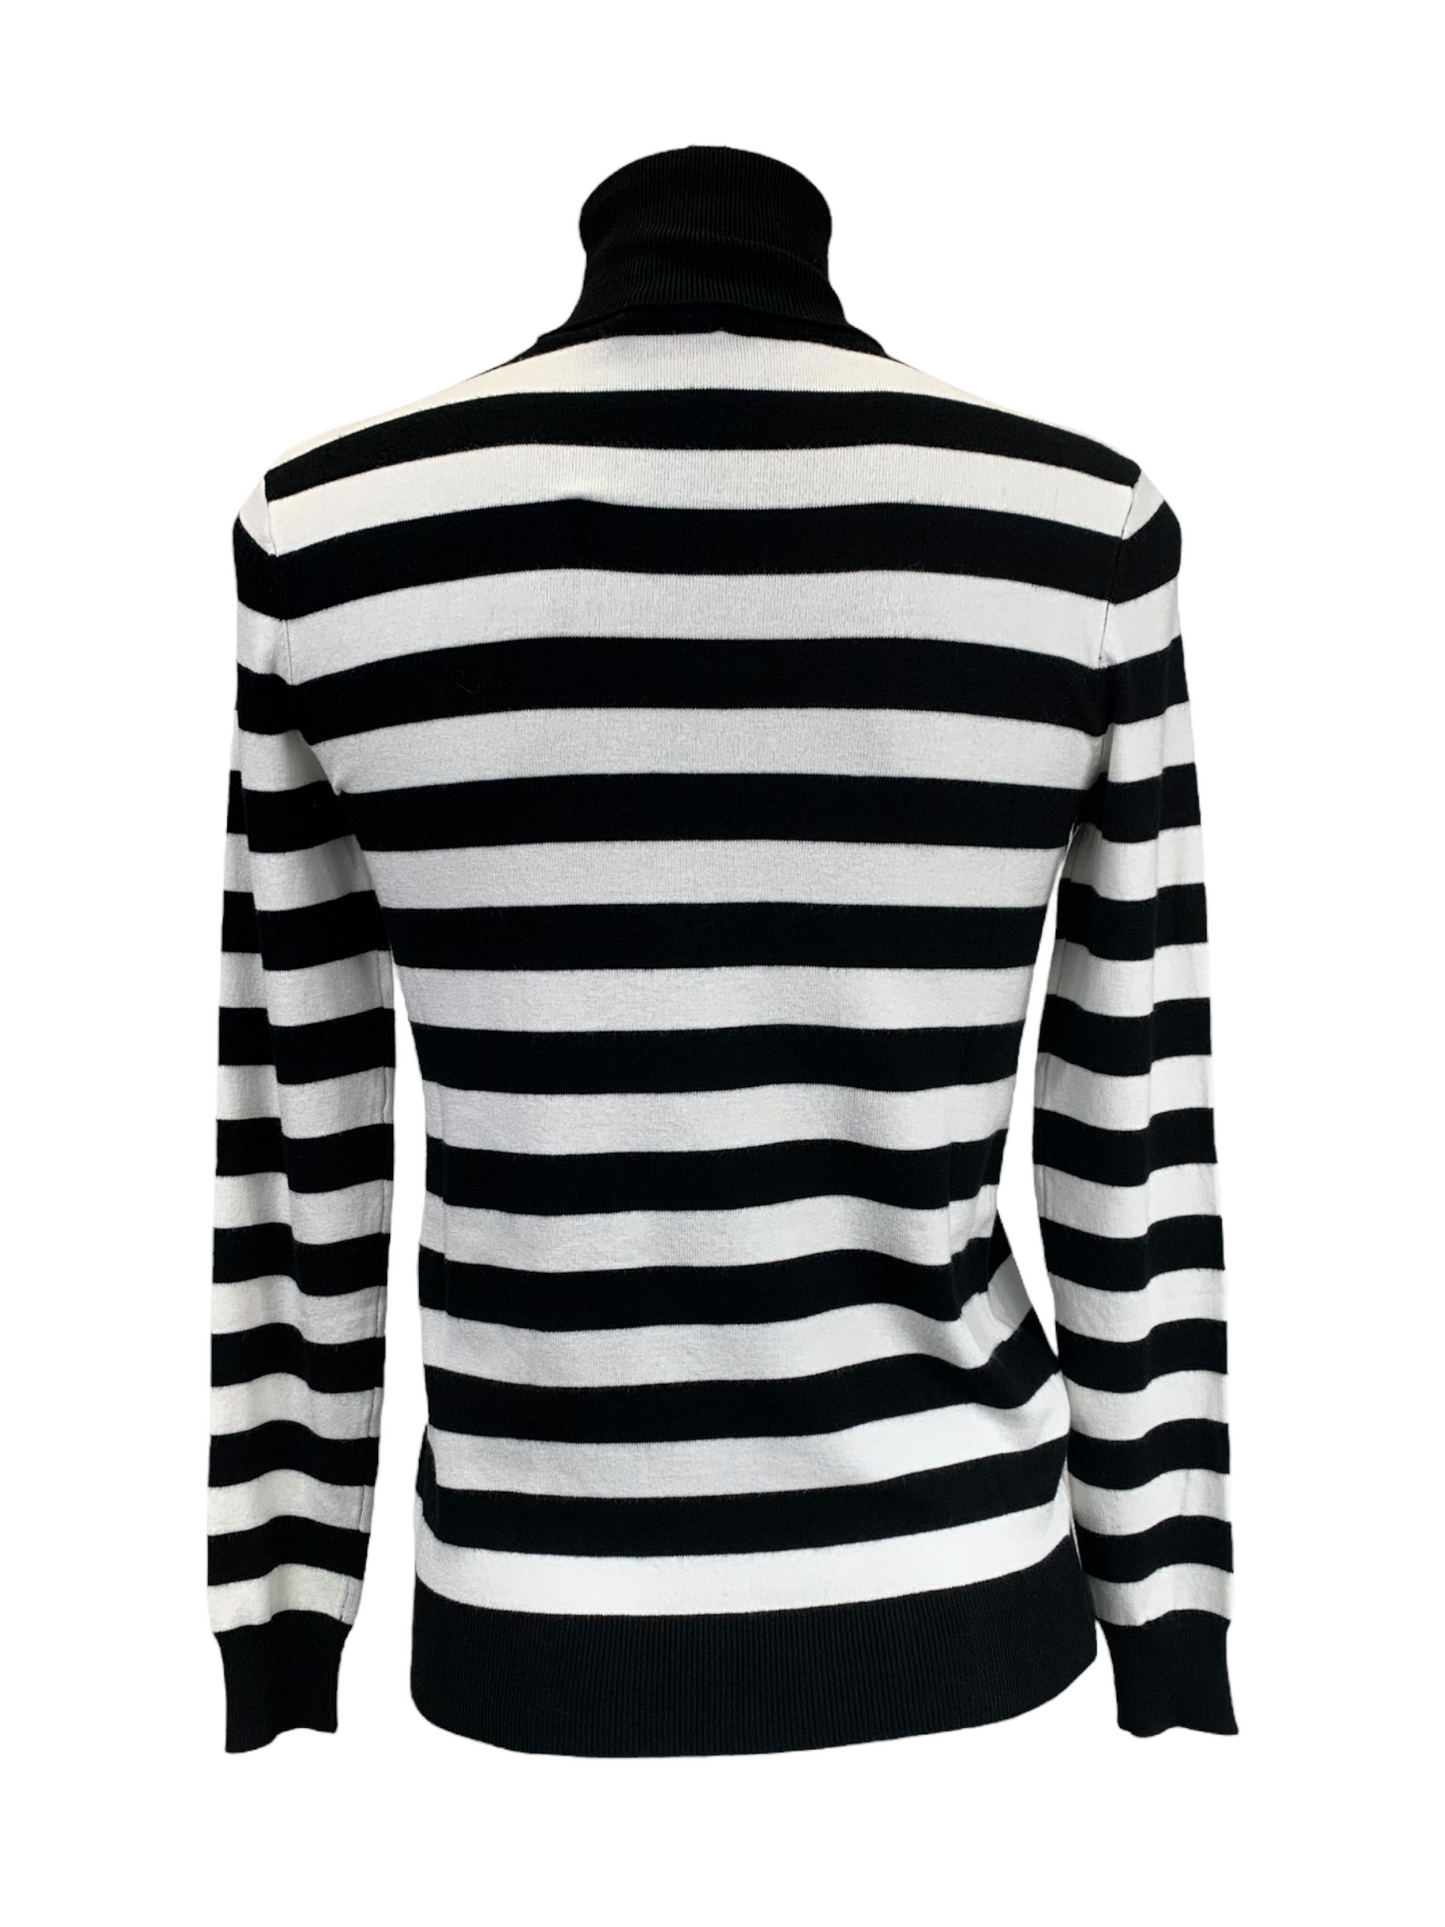 GUESS women's striped knit top